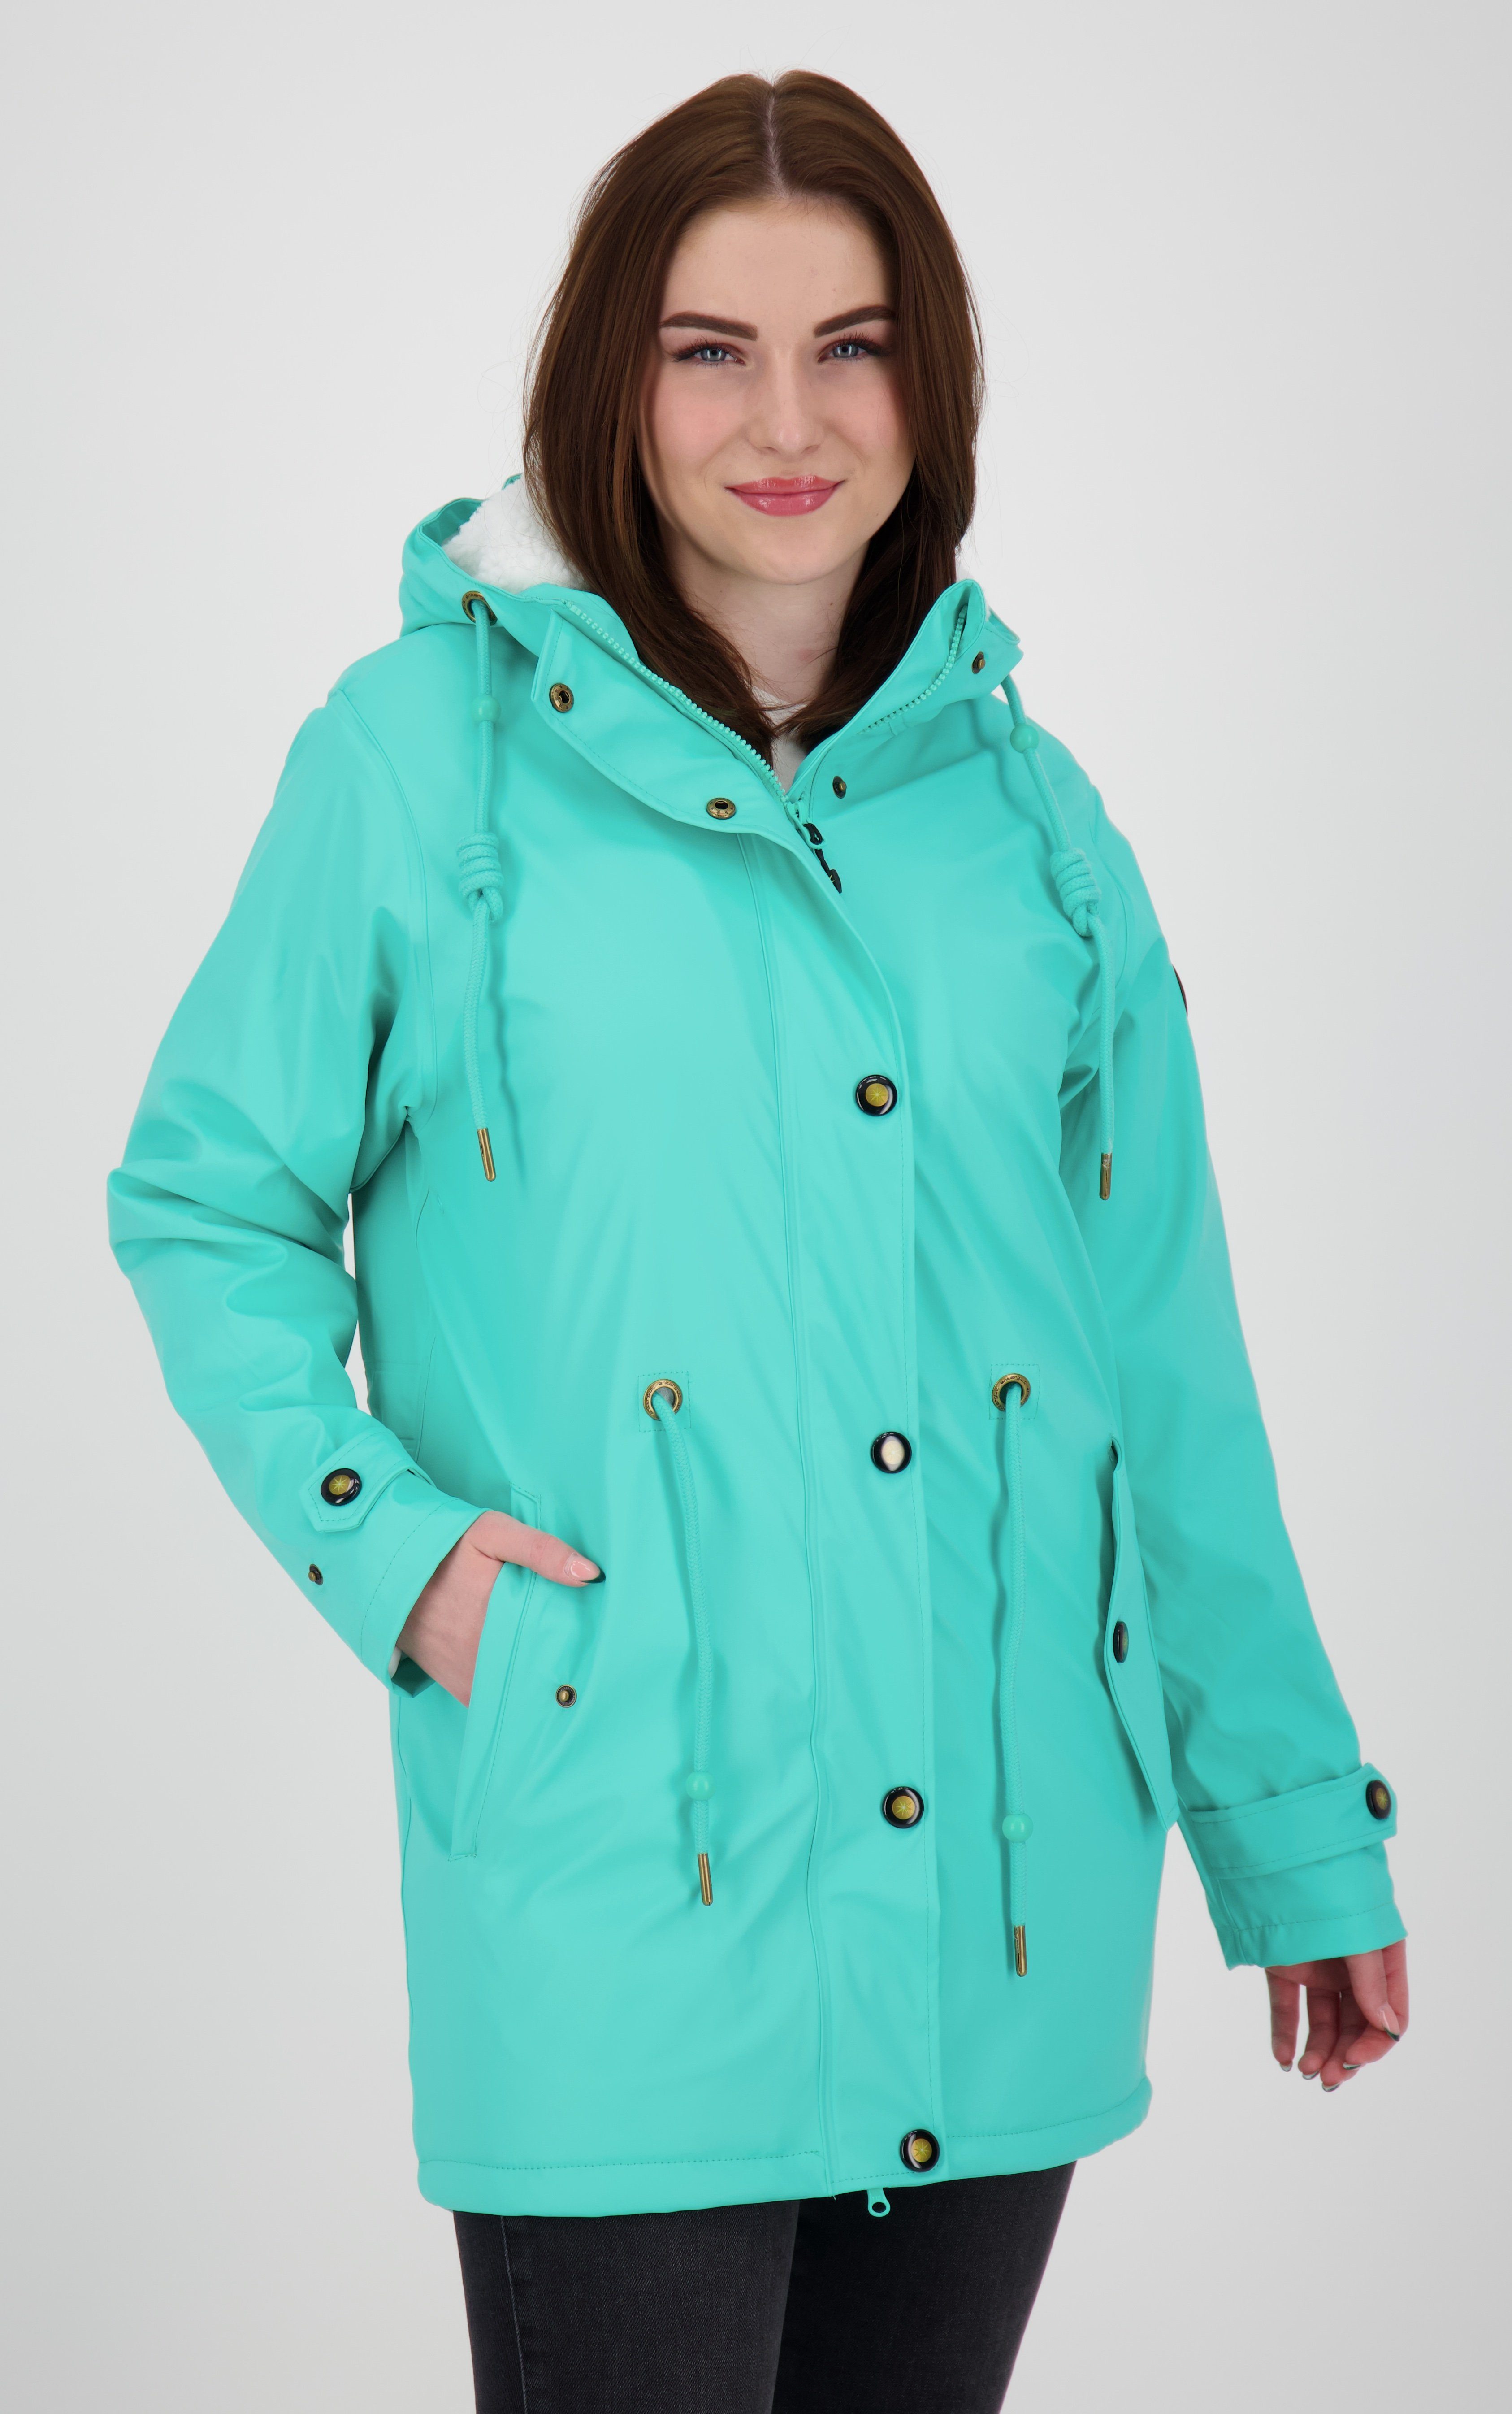 DEPROC Active Regenjacke Regenjacke & Longjacket ANKERGLUT #ankergluttraum CS NEW WOMEN auch in Großen Größen erhältlich turquoise